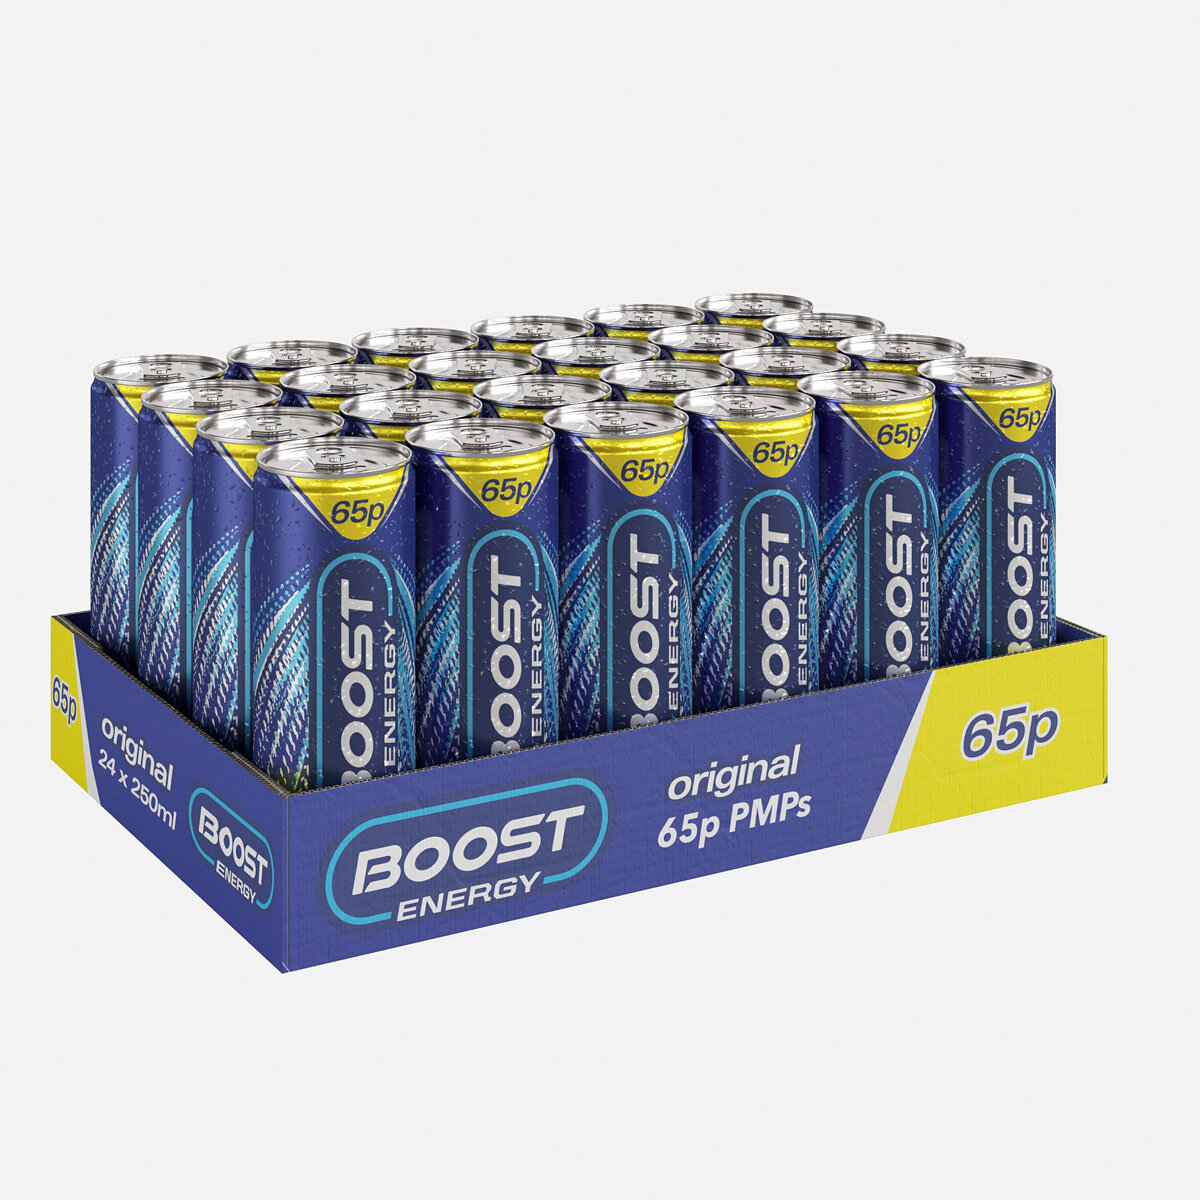 Boost Energy Original PMP 65p, 24 x 250ml | Costco UK